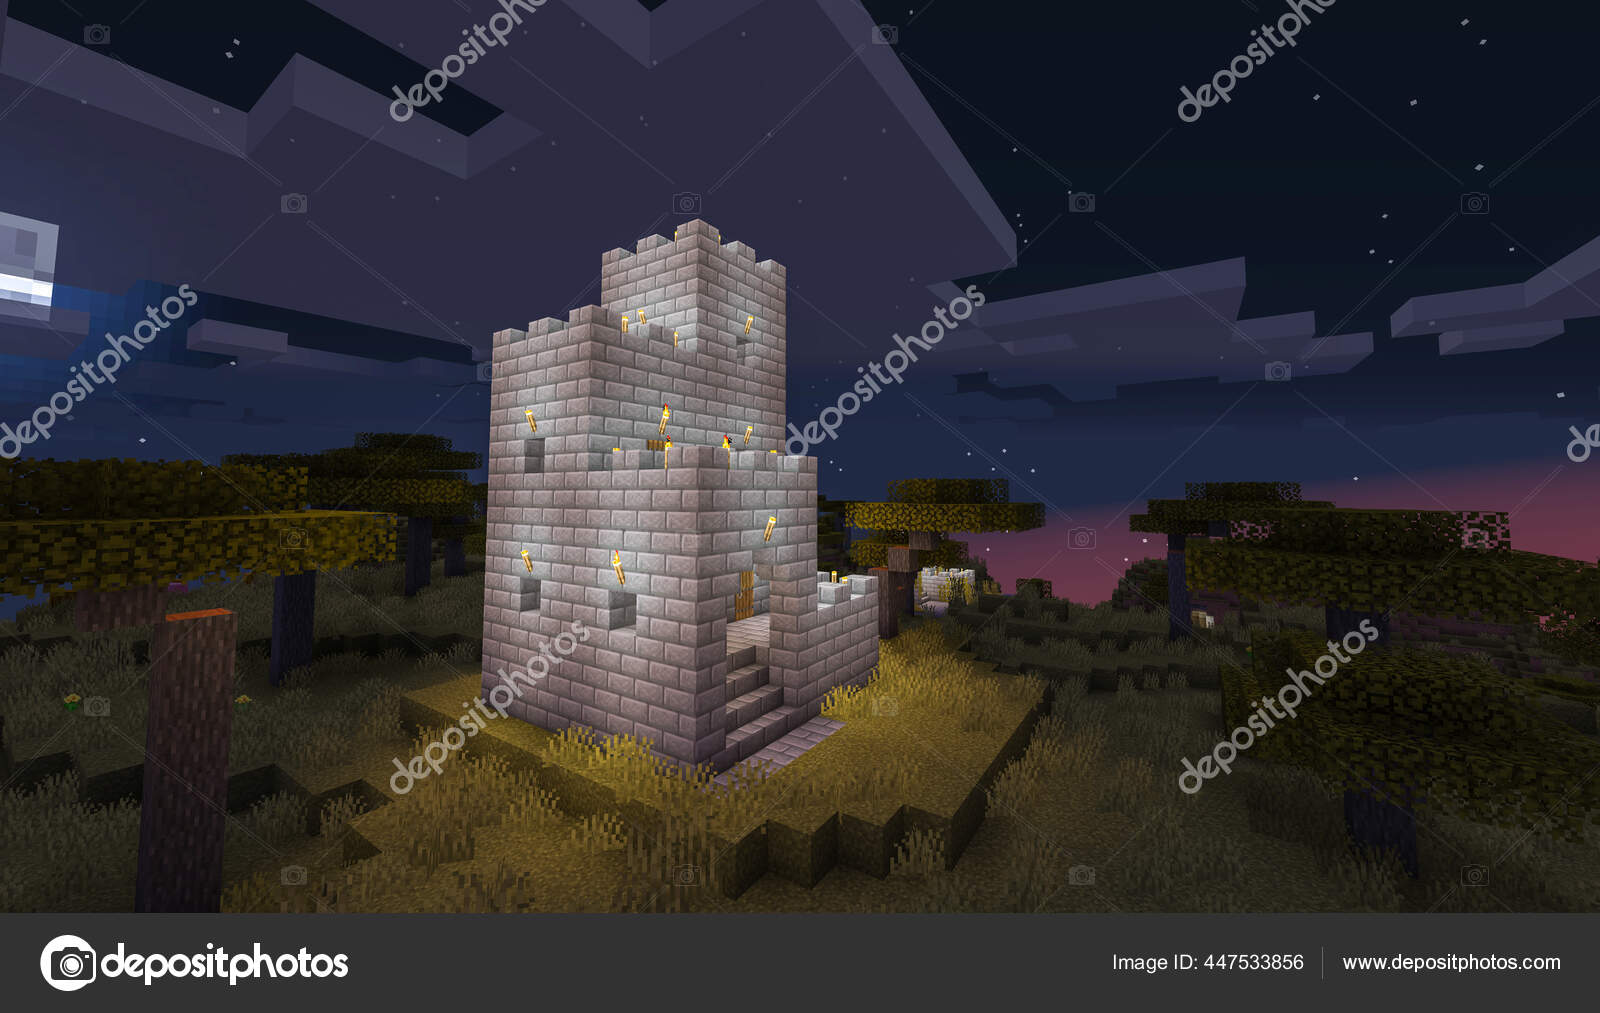 Minecraft Game February 2021 Sample Simply Stone Medieval Castle Minecraft  – Stock Editorial Photo © Yuriy_Vlasenko #447533624